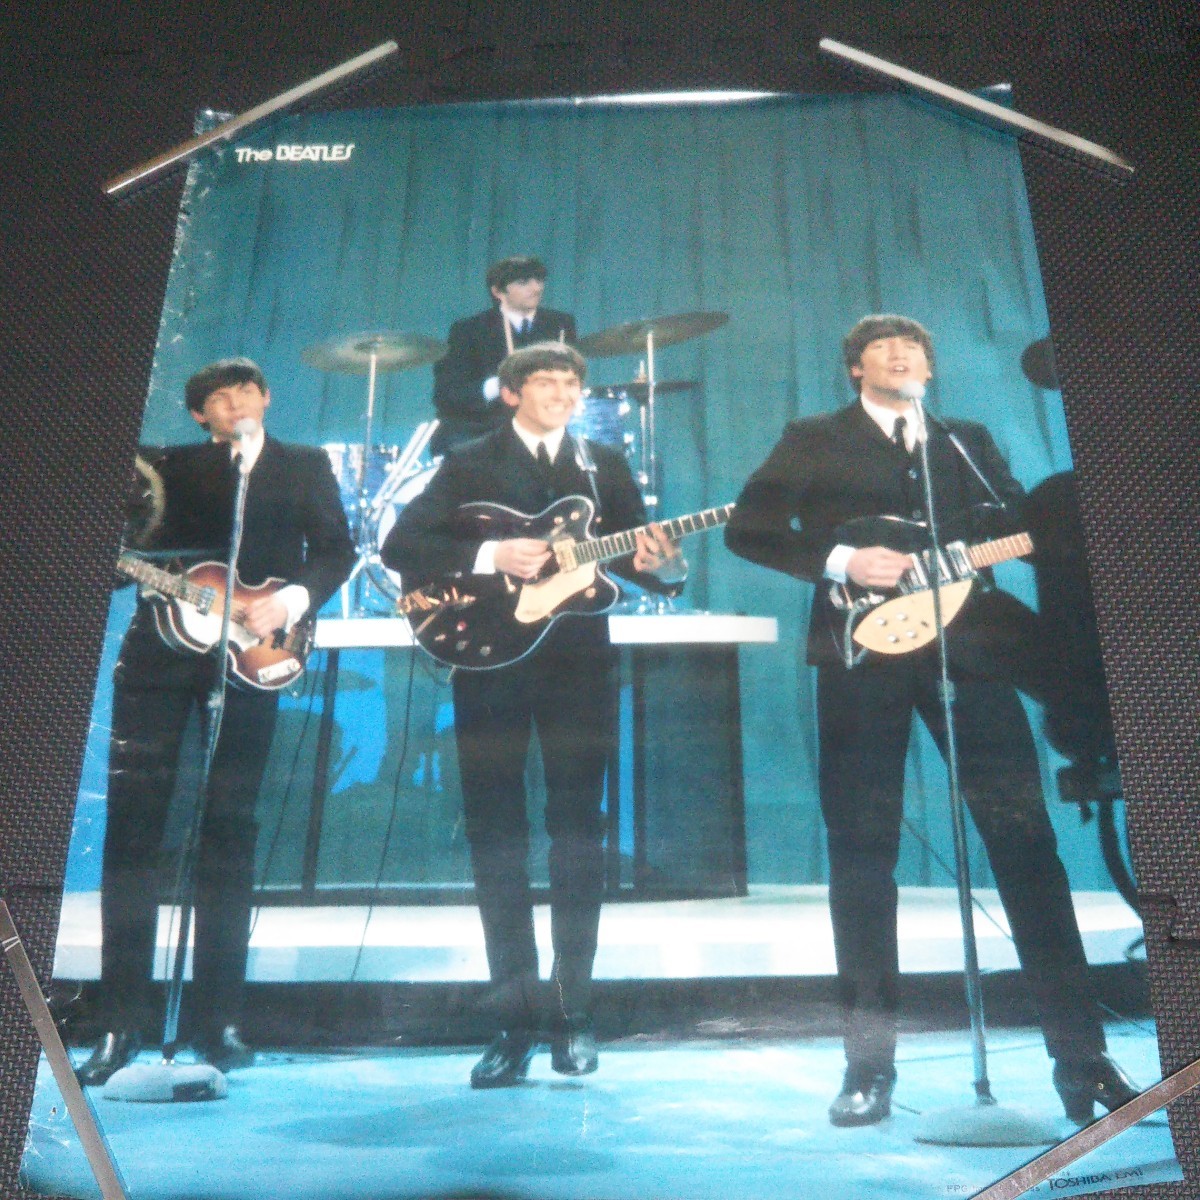  treasure The Beatles B2 size poster THEBEATLES Showa Retro 